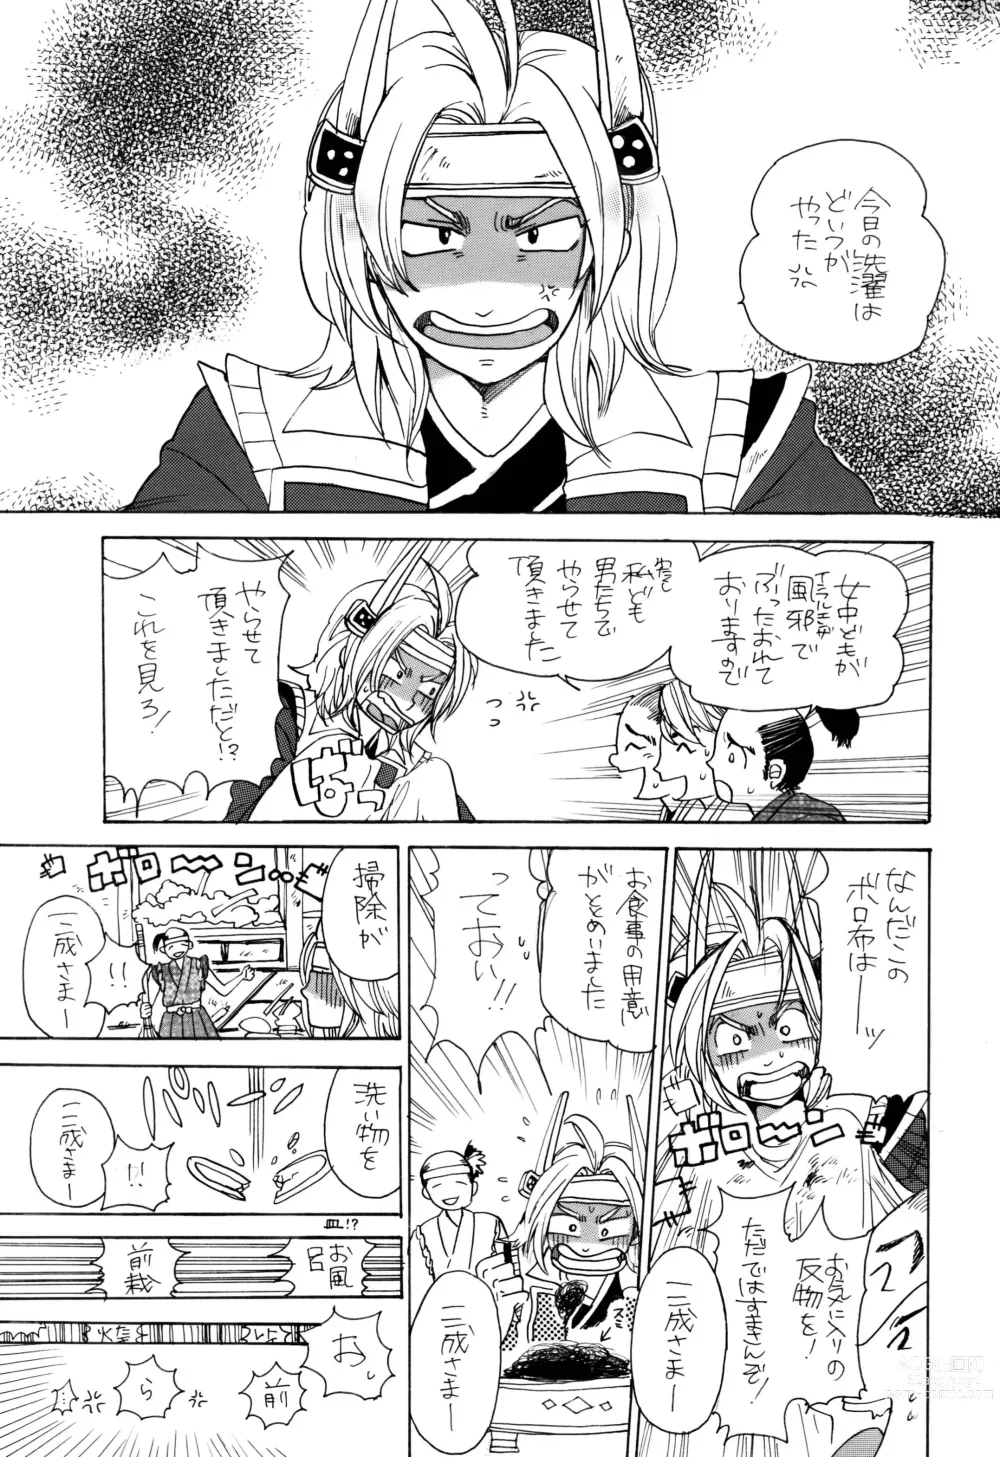 Page 7 of doujinshi Matome Hon